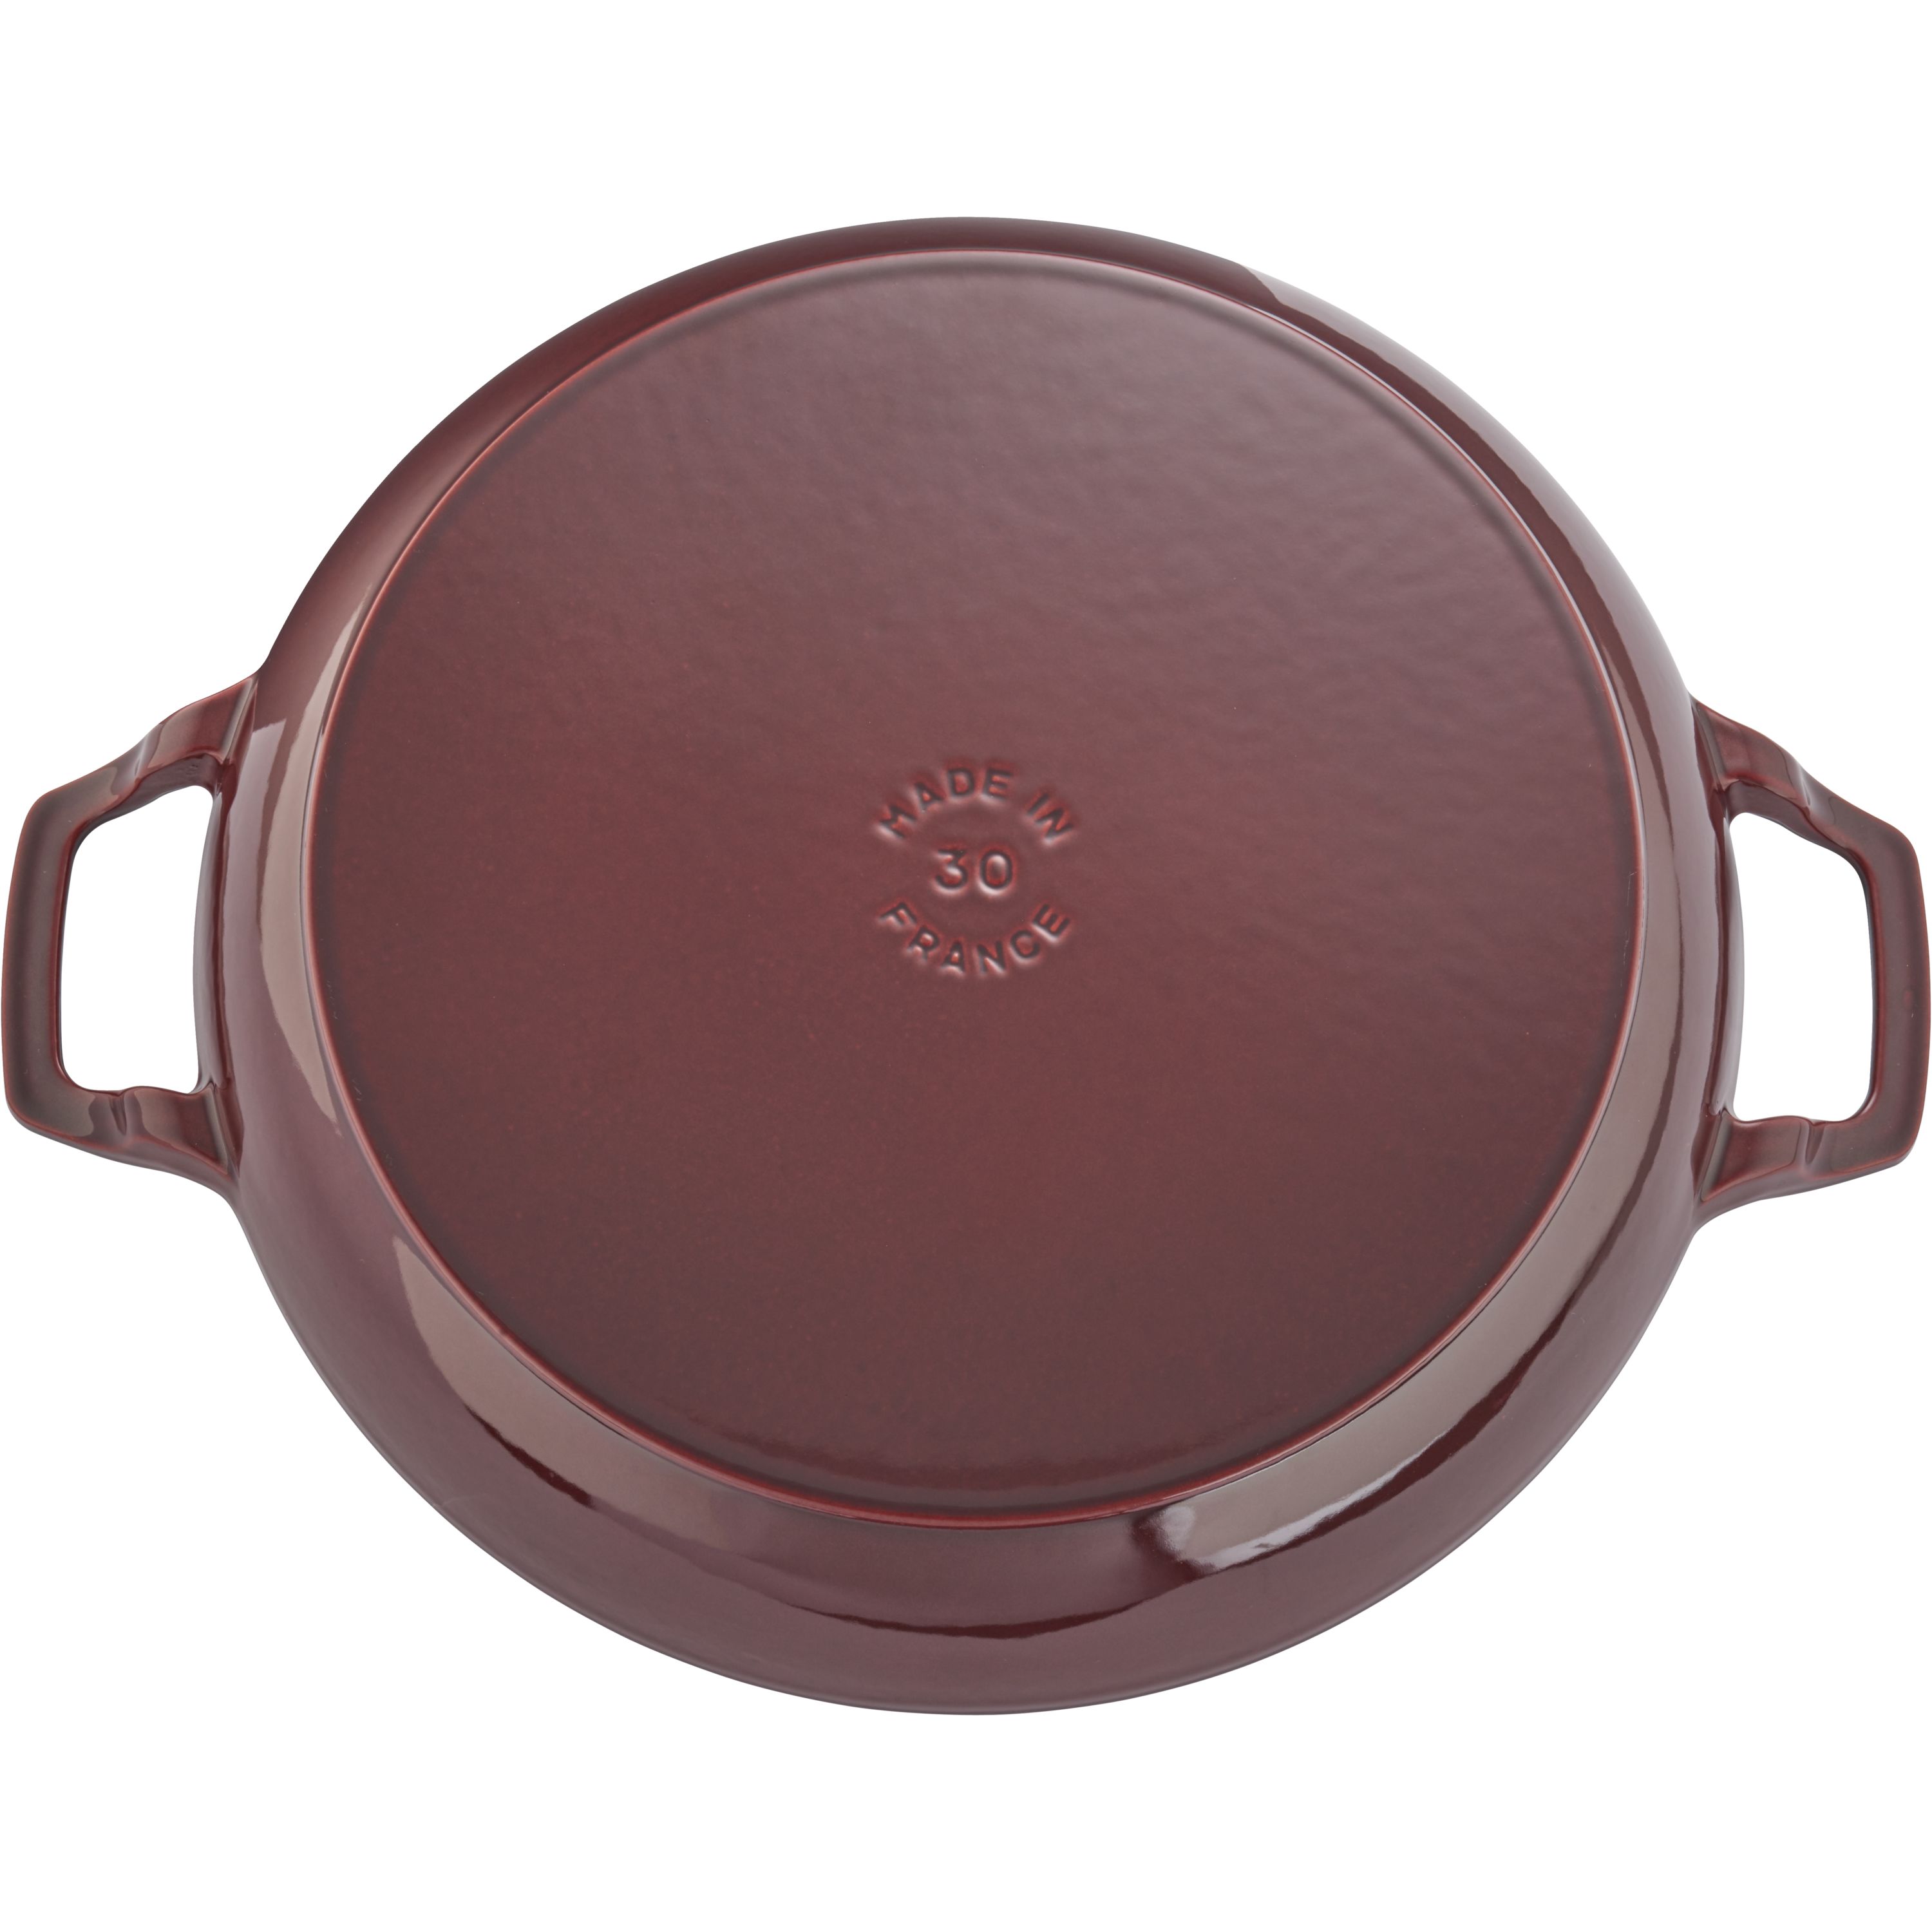 Buy Staub Cast Iron - Braisers/ Sauté Pans Saute pan with glass